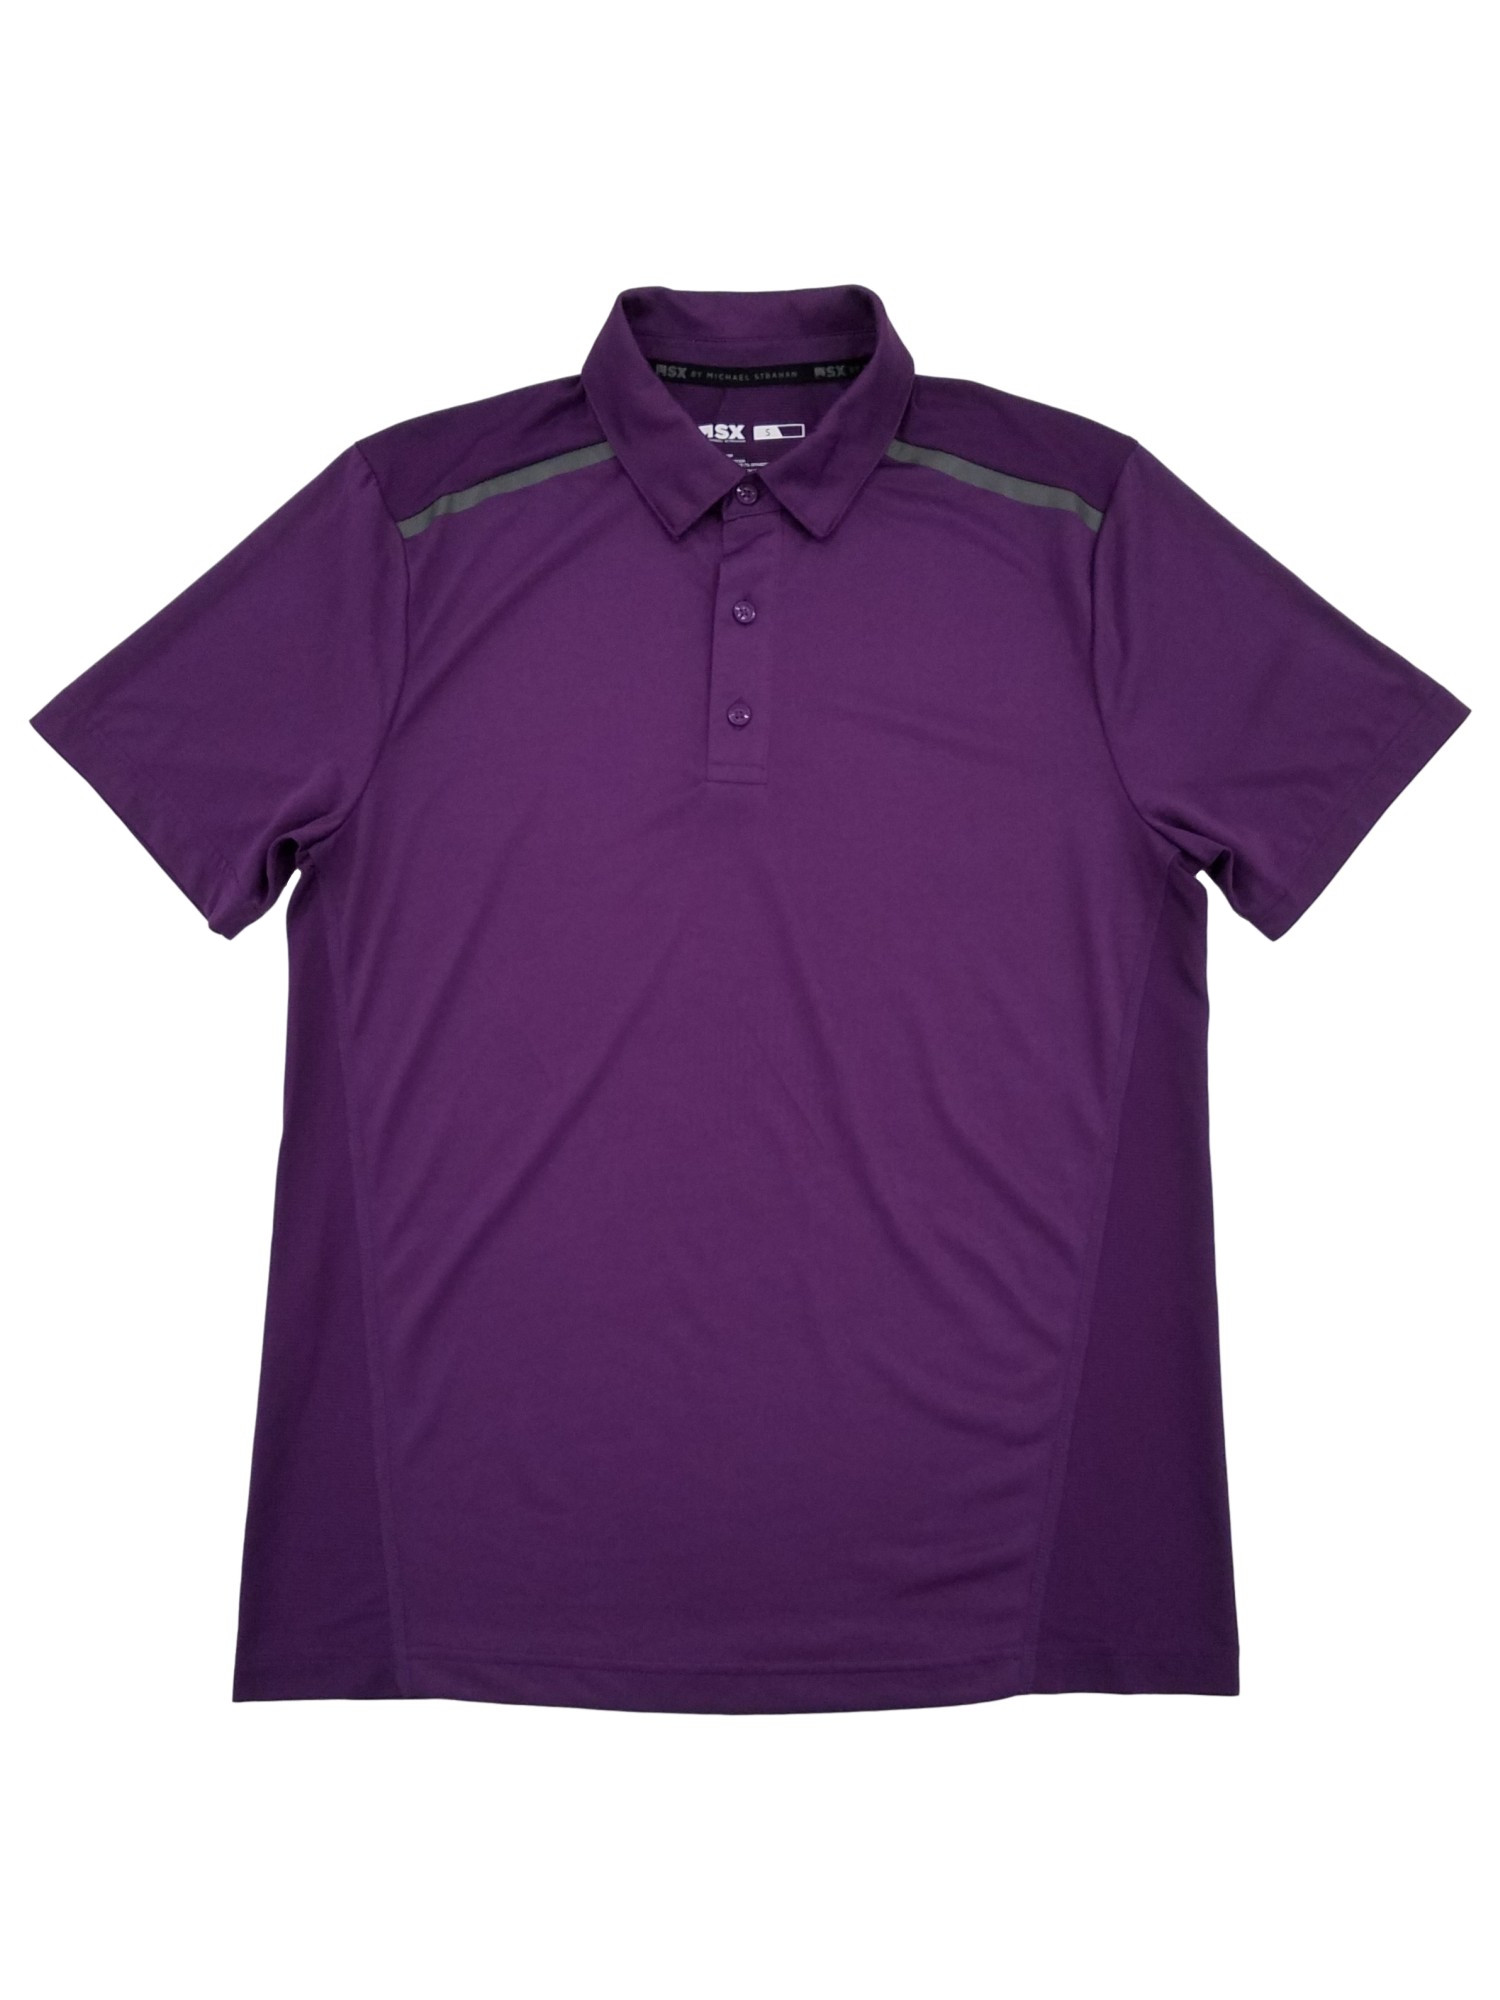 MSX By Michael Strahan Mens Acai Purple Performance Jersey Polo Shirt Small